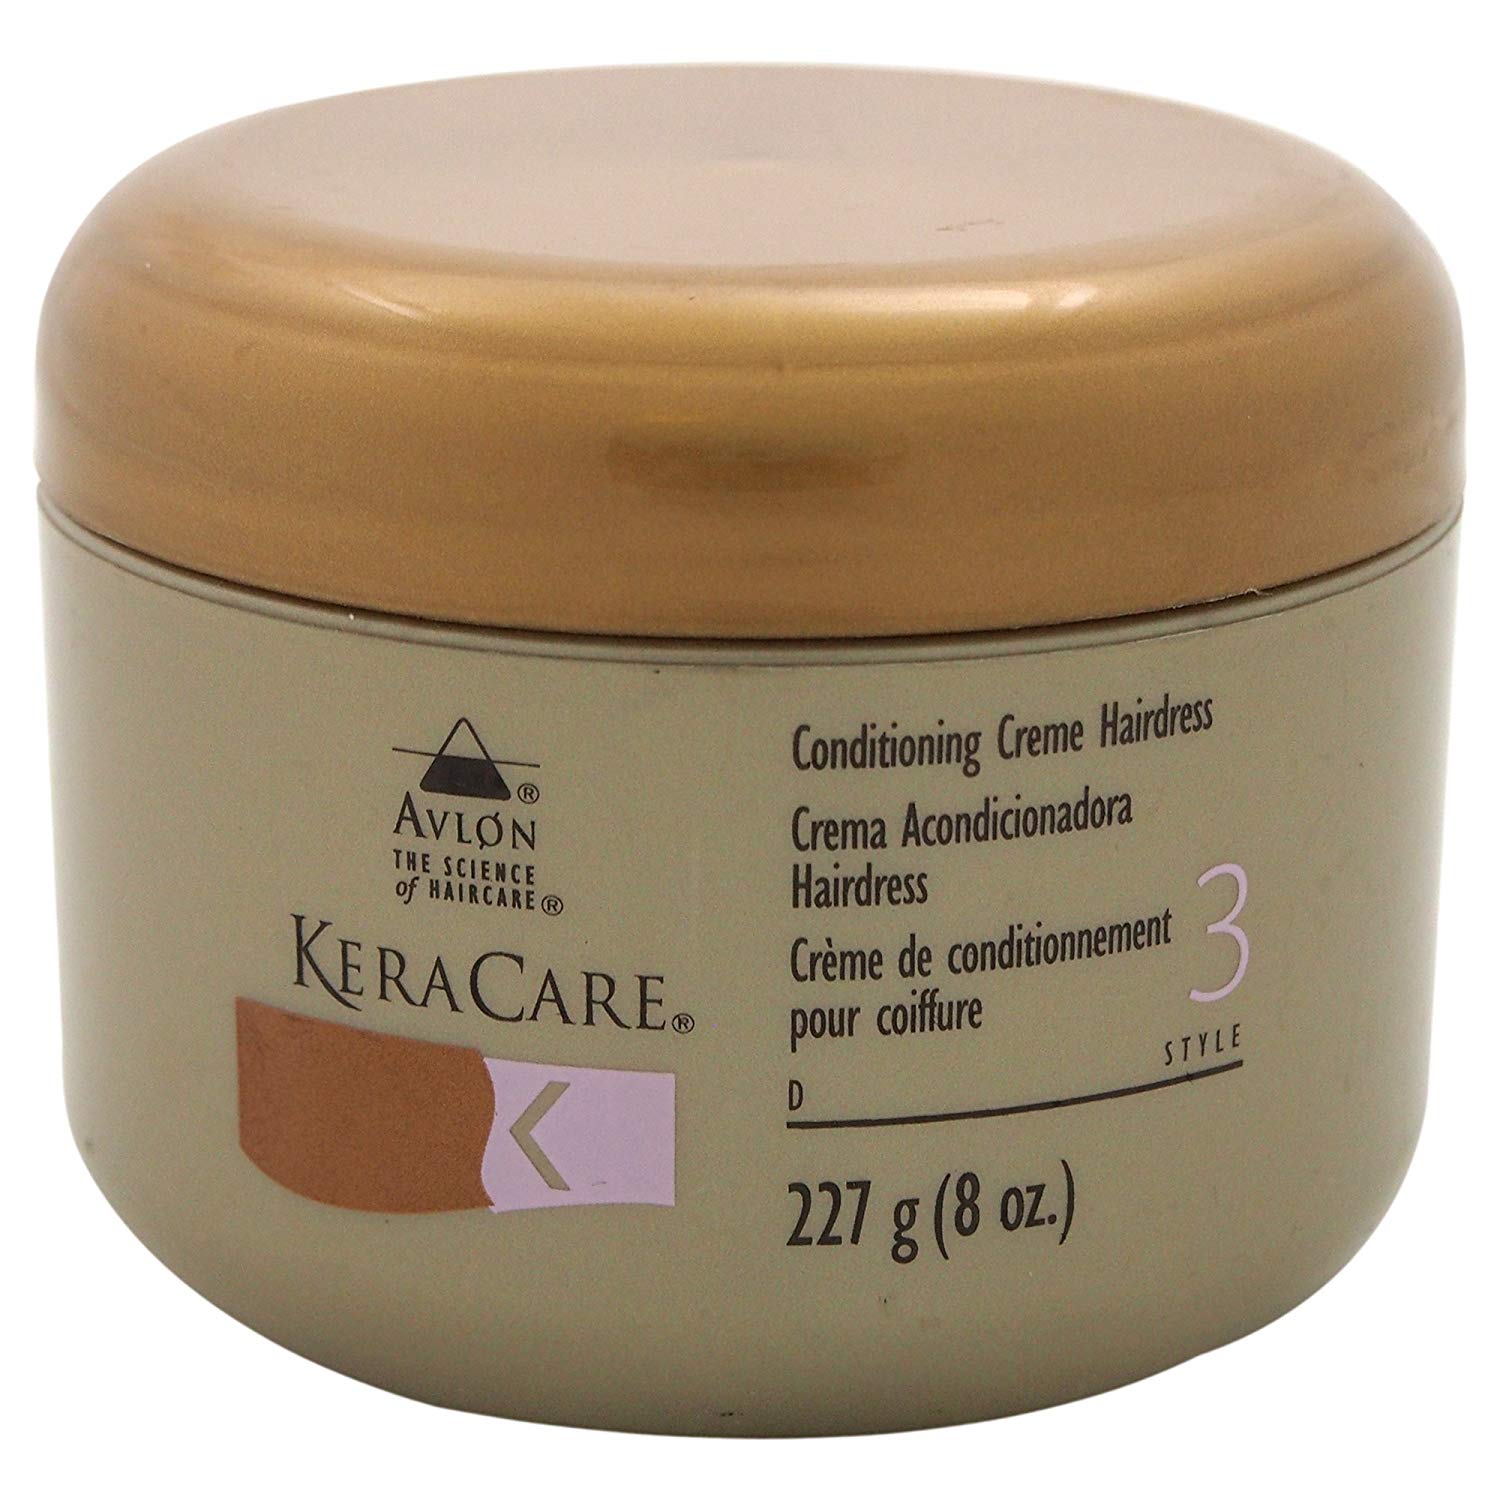 KeraCare Conditioning Creme Hairdress - 8oz